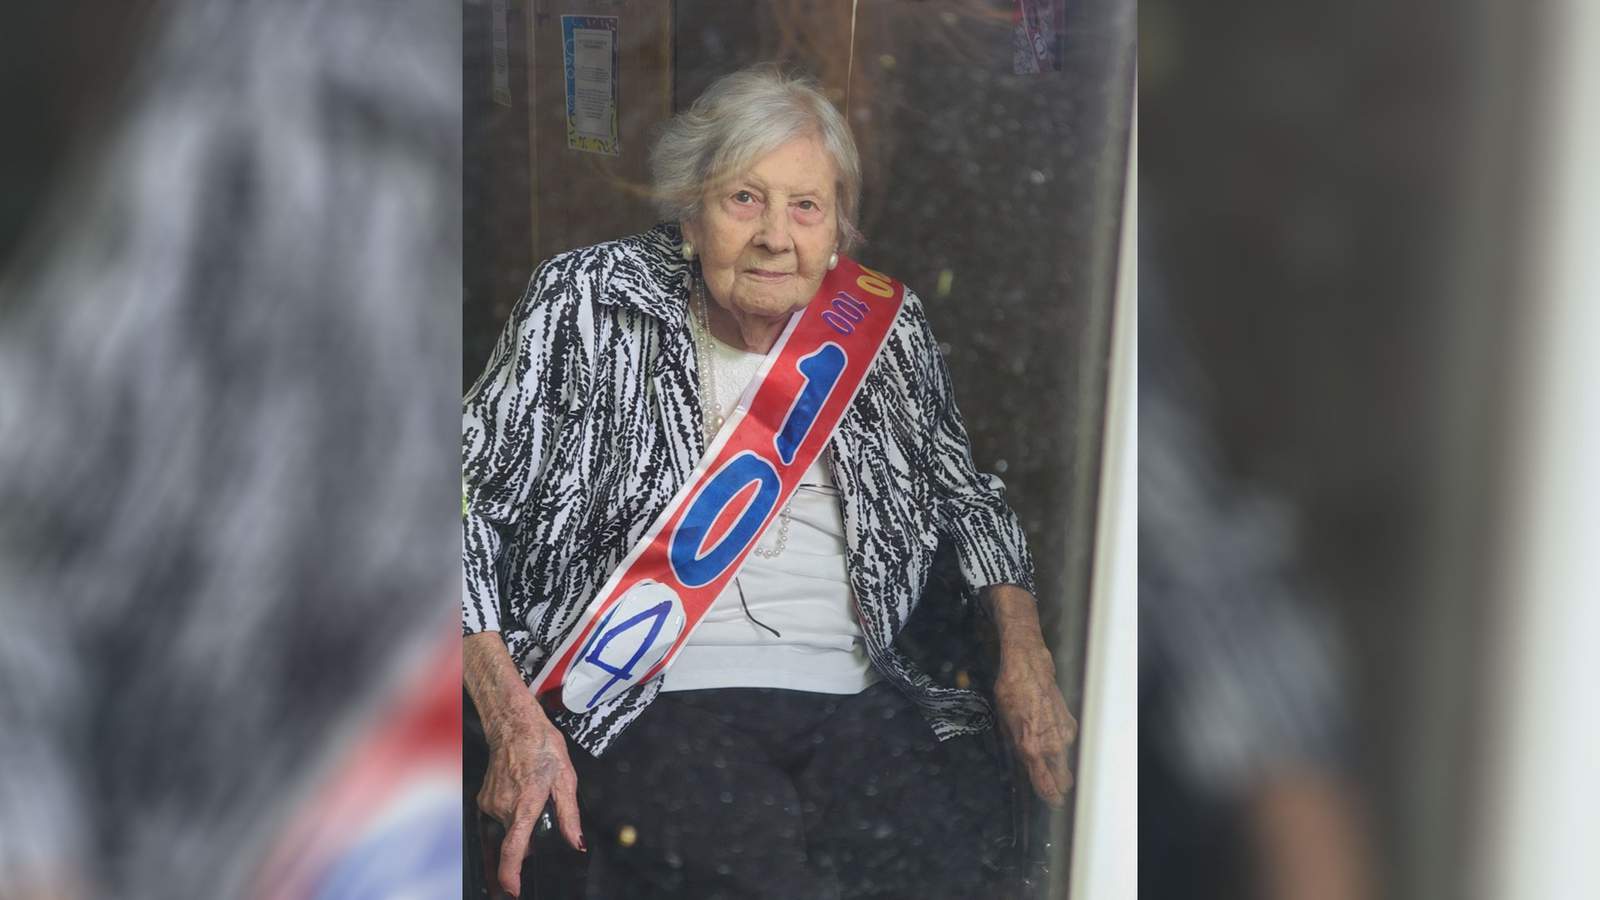 104-year-old Carroll County grandmother dies after battling coronavirus